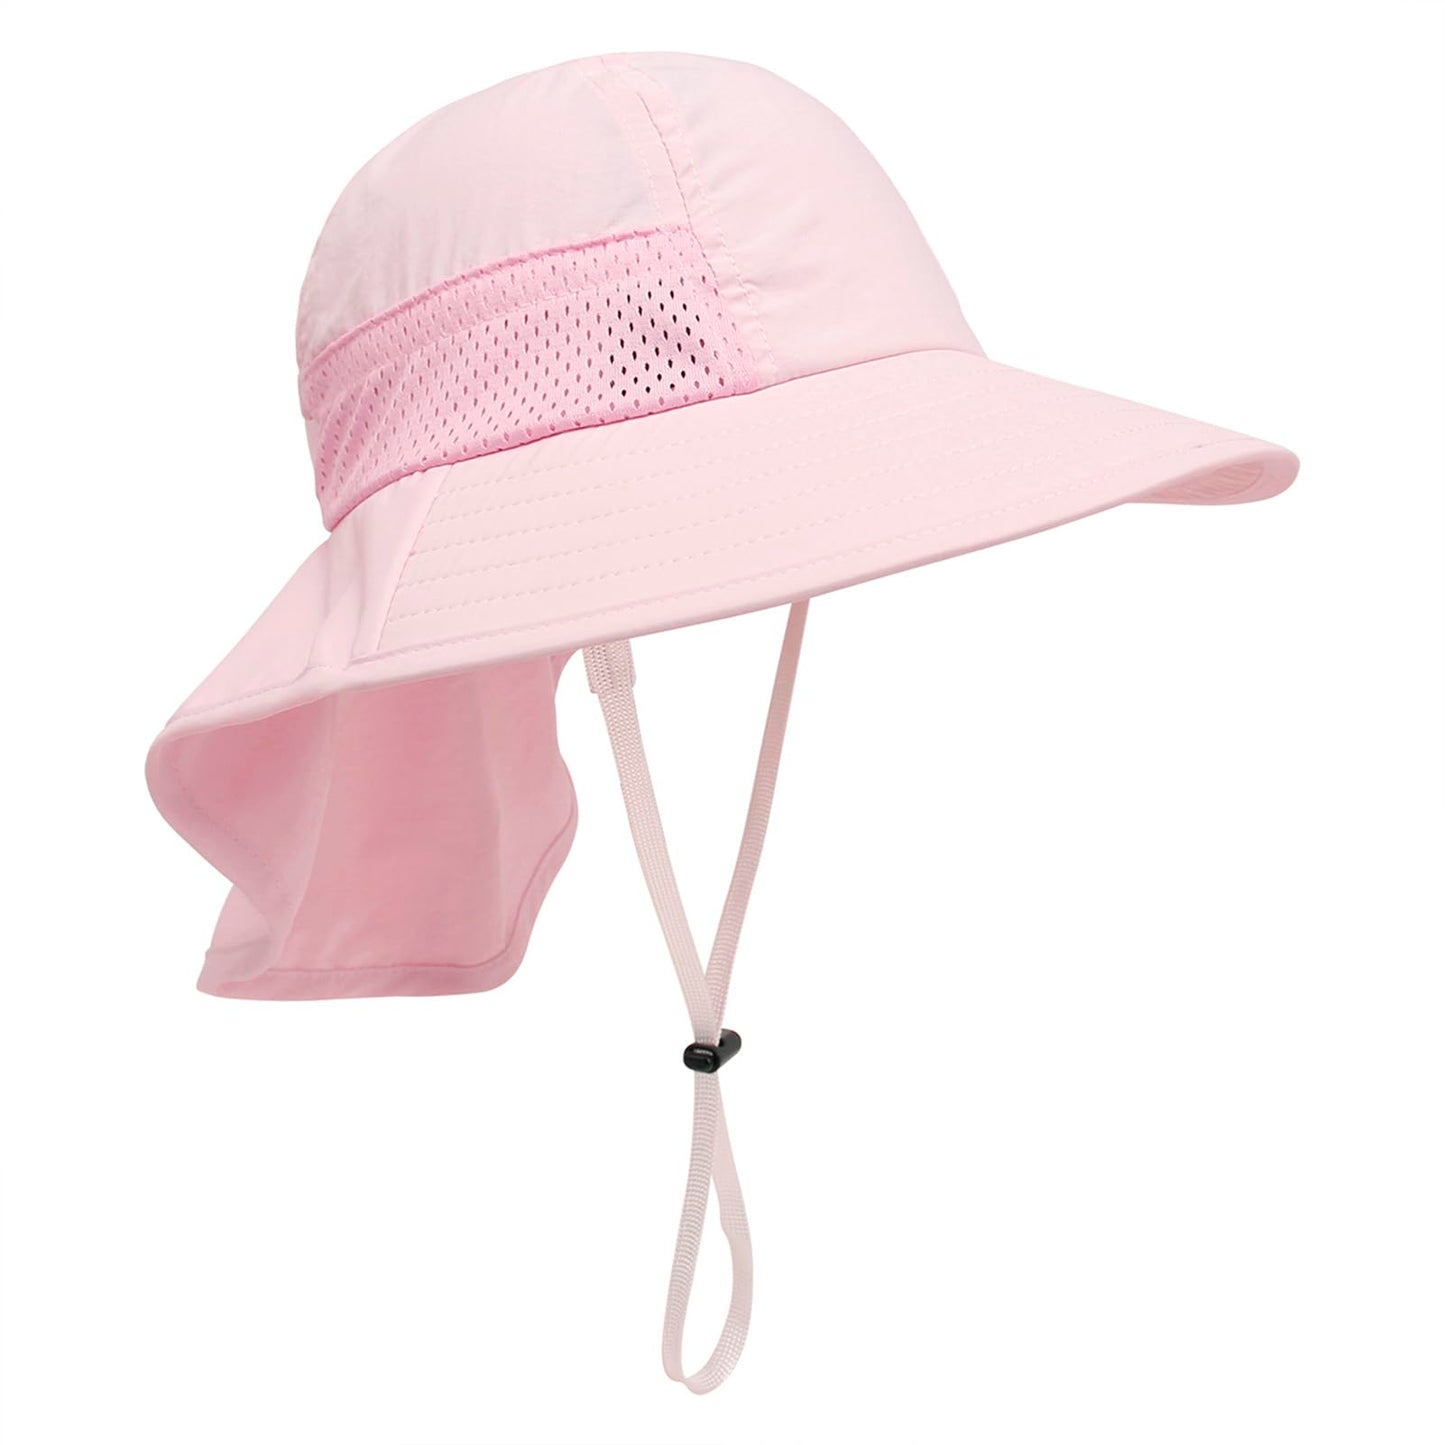 Muryobao Kids Girls Boys Sun Hat Summer UPF 50+ Protection Caps Wide Brim Neck Flap Beach Play Hats Age 1-7 Years